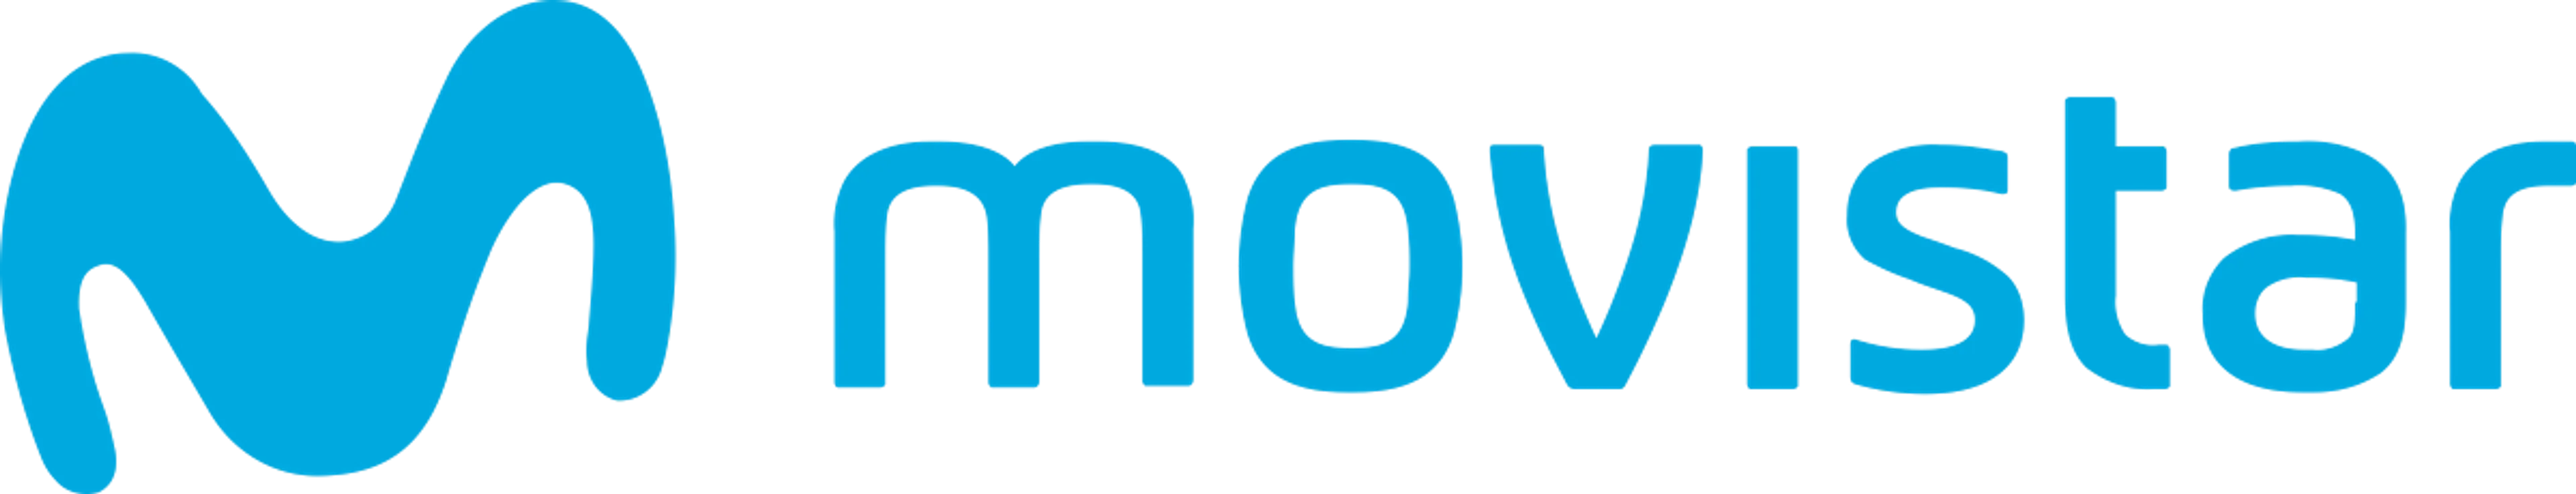 MOVISTAR logo